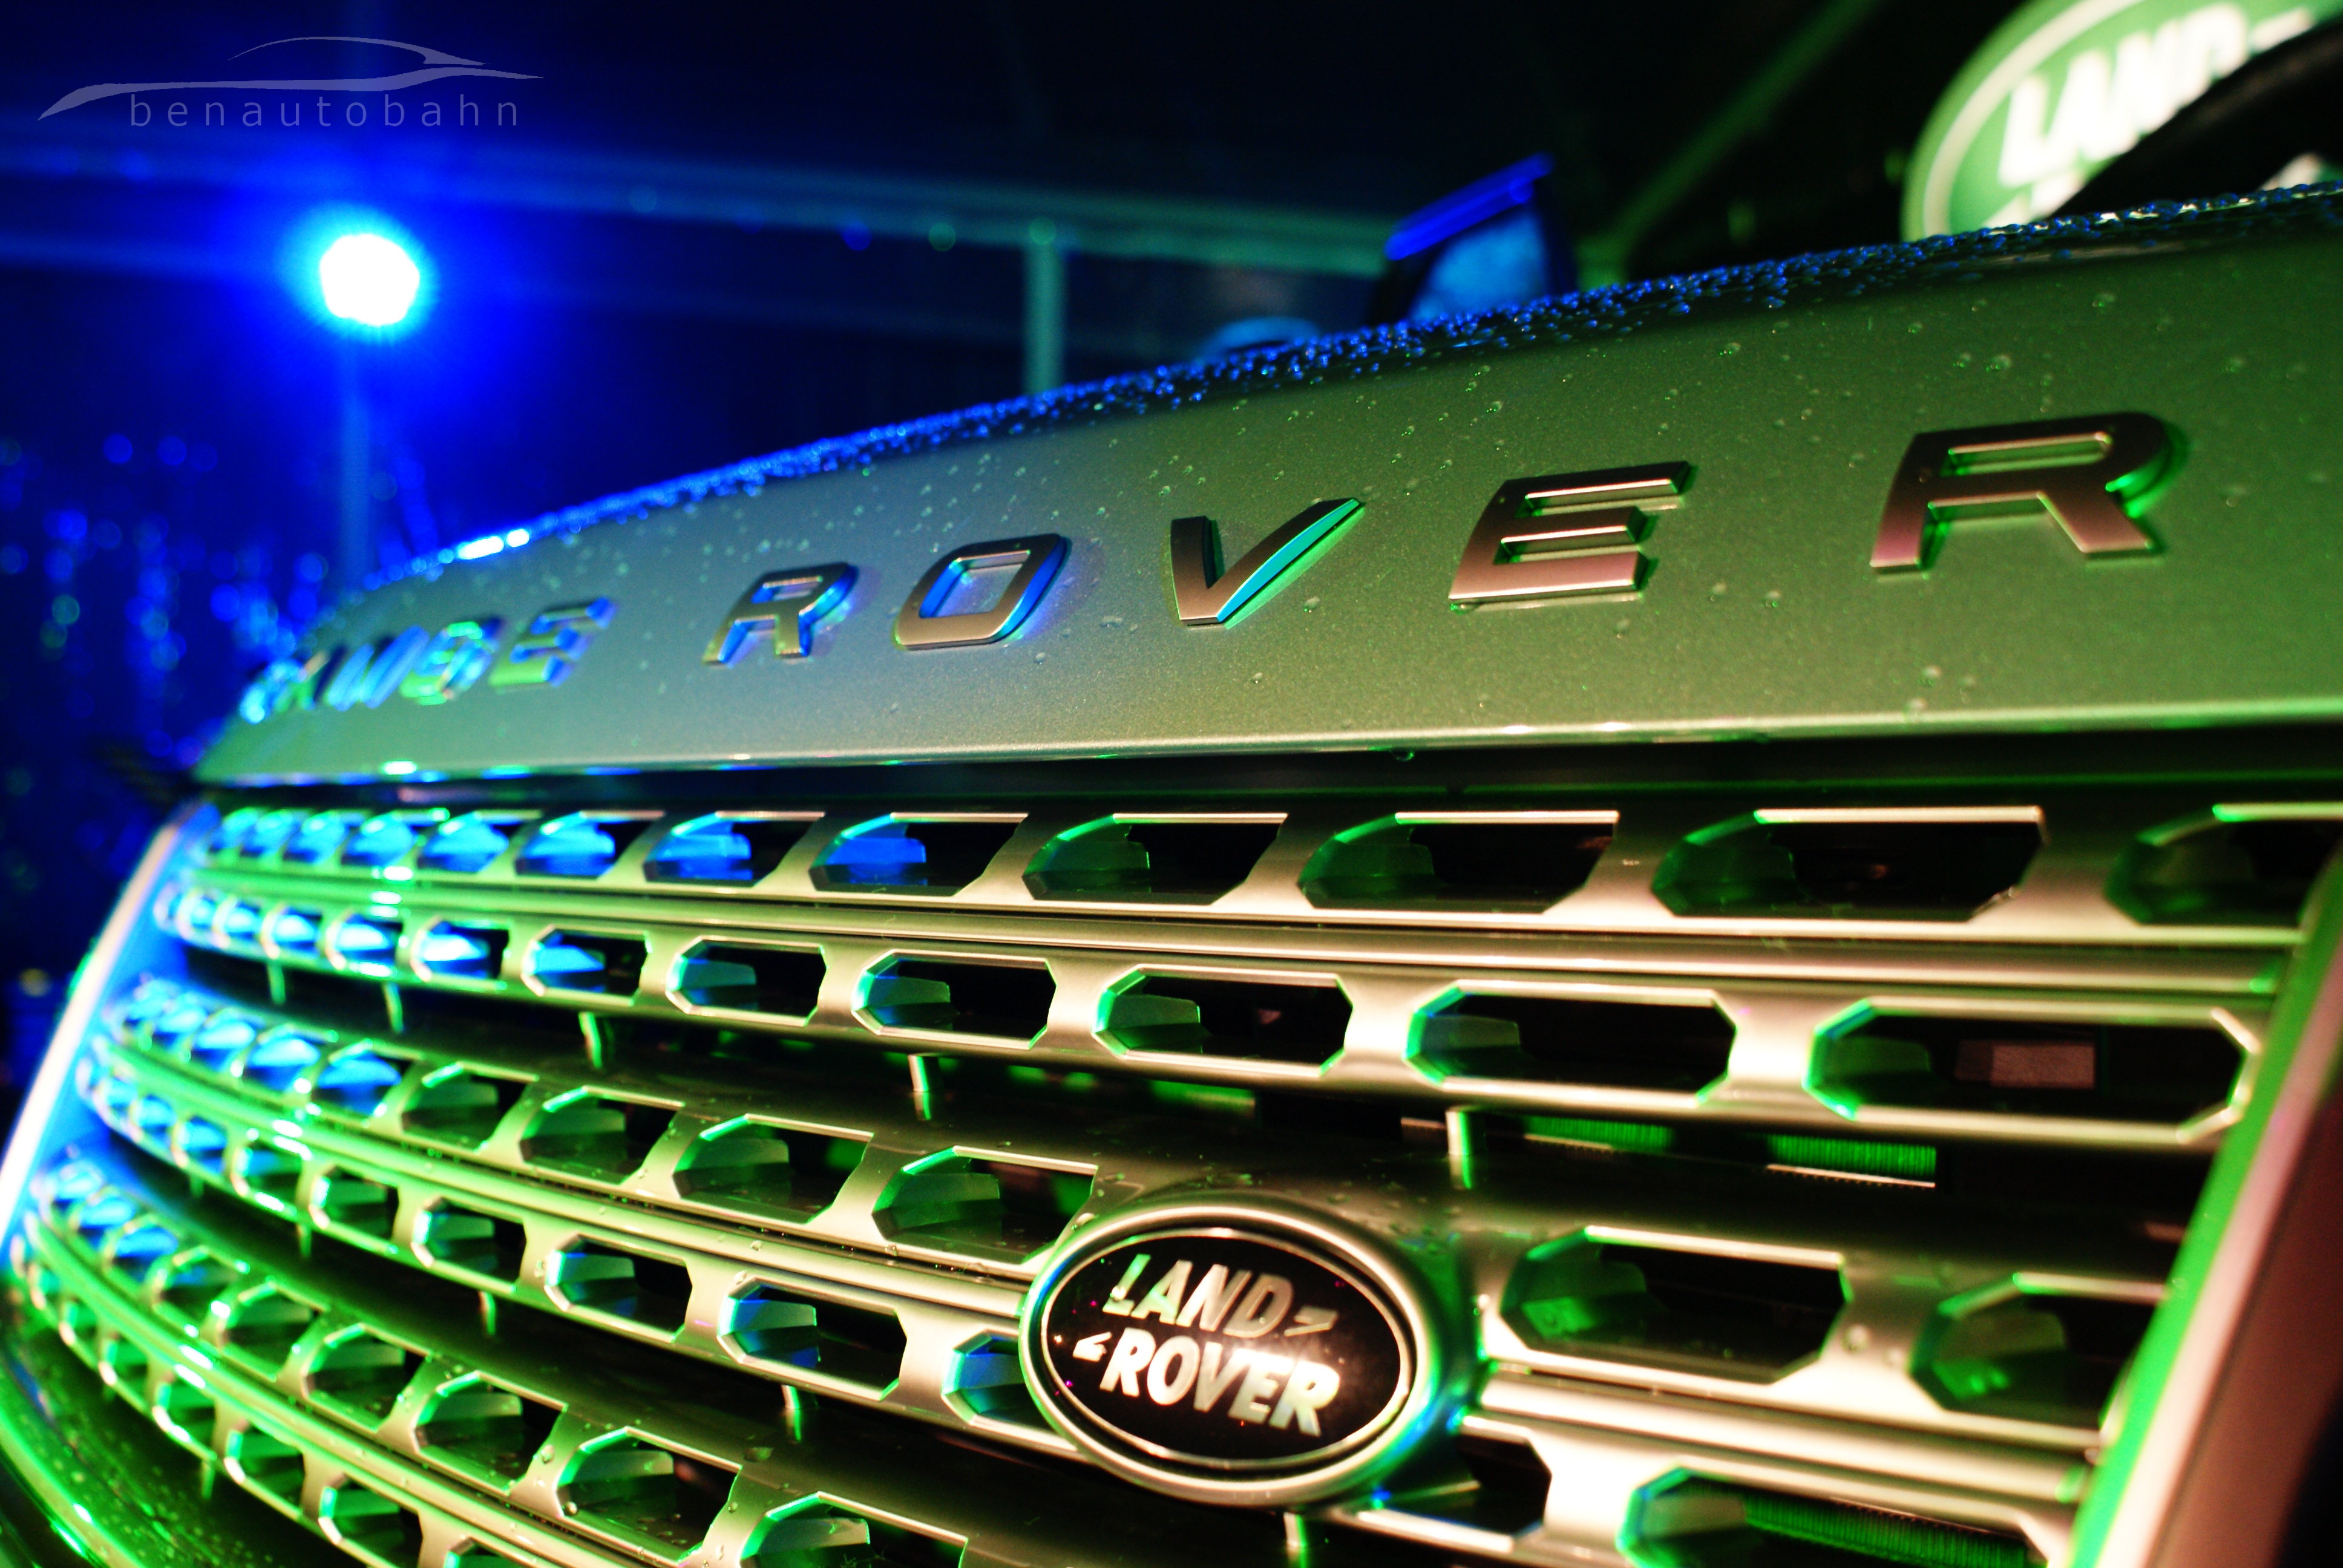 Range Rover media launch event